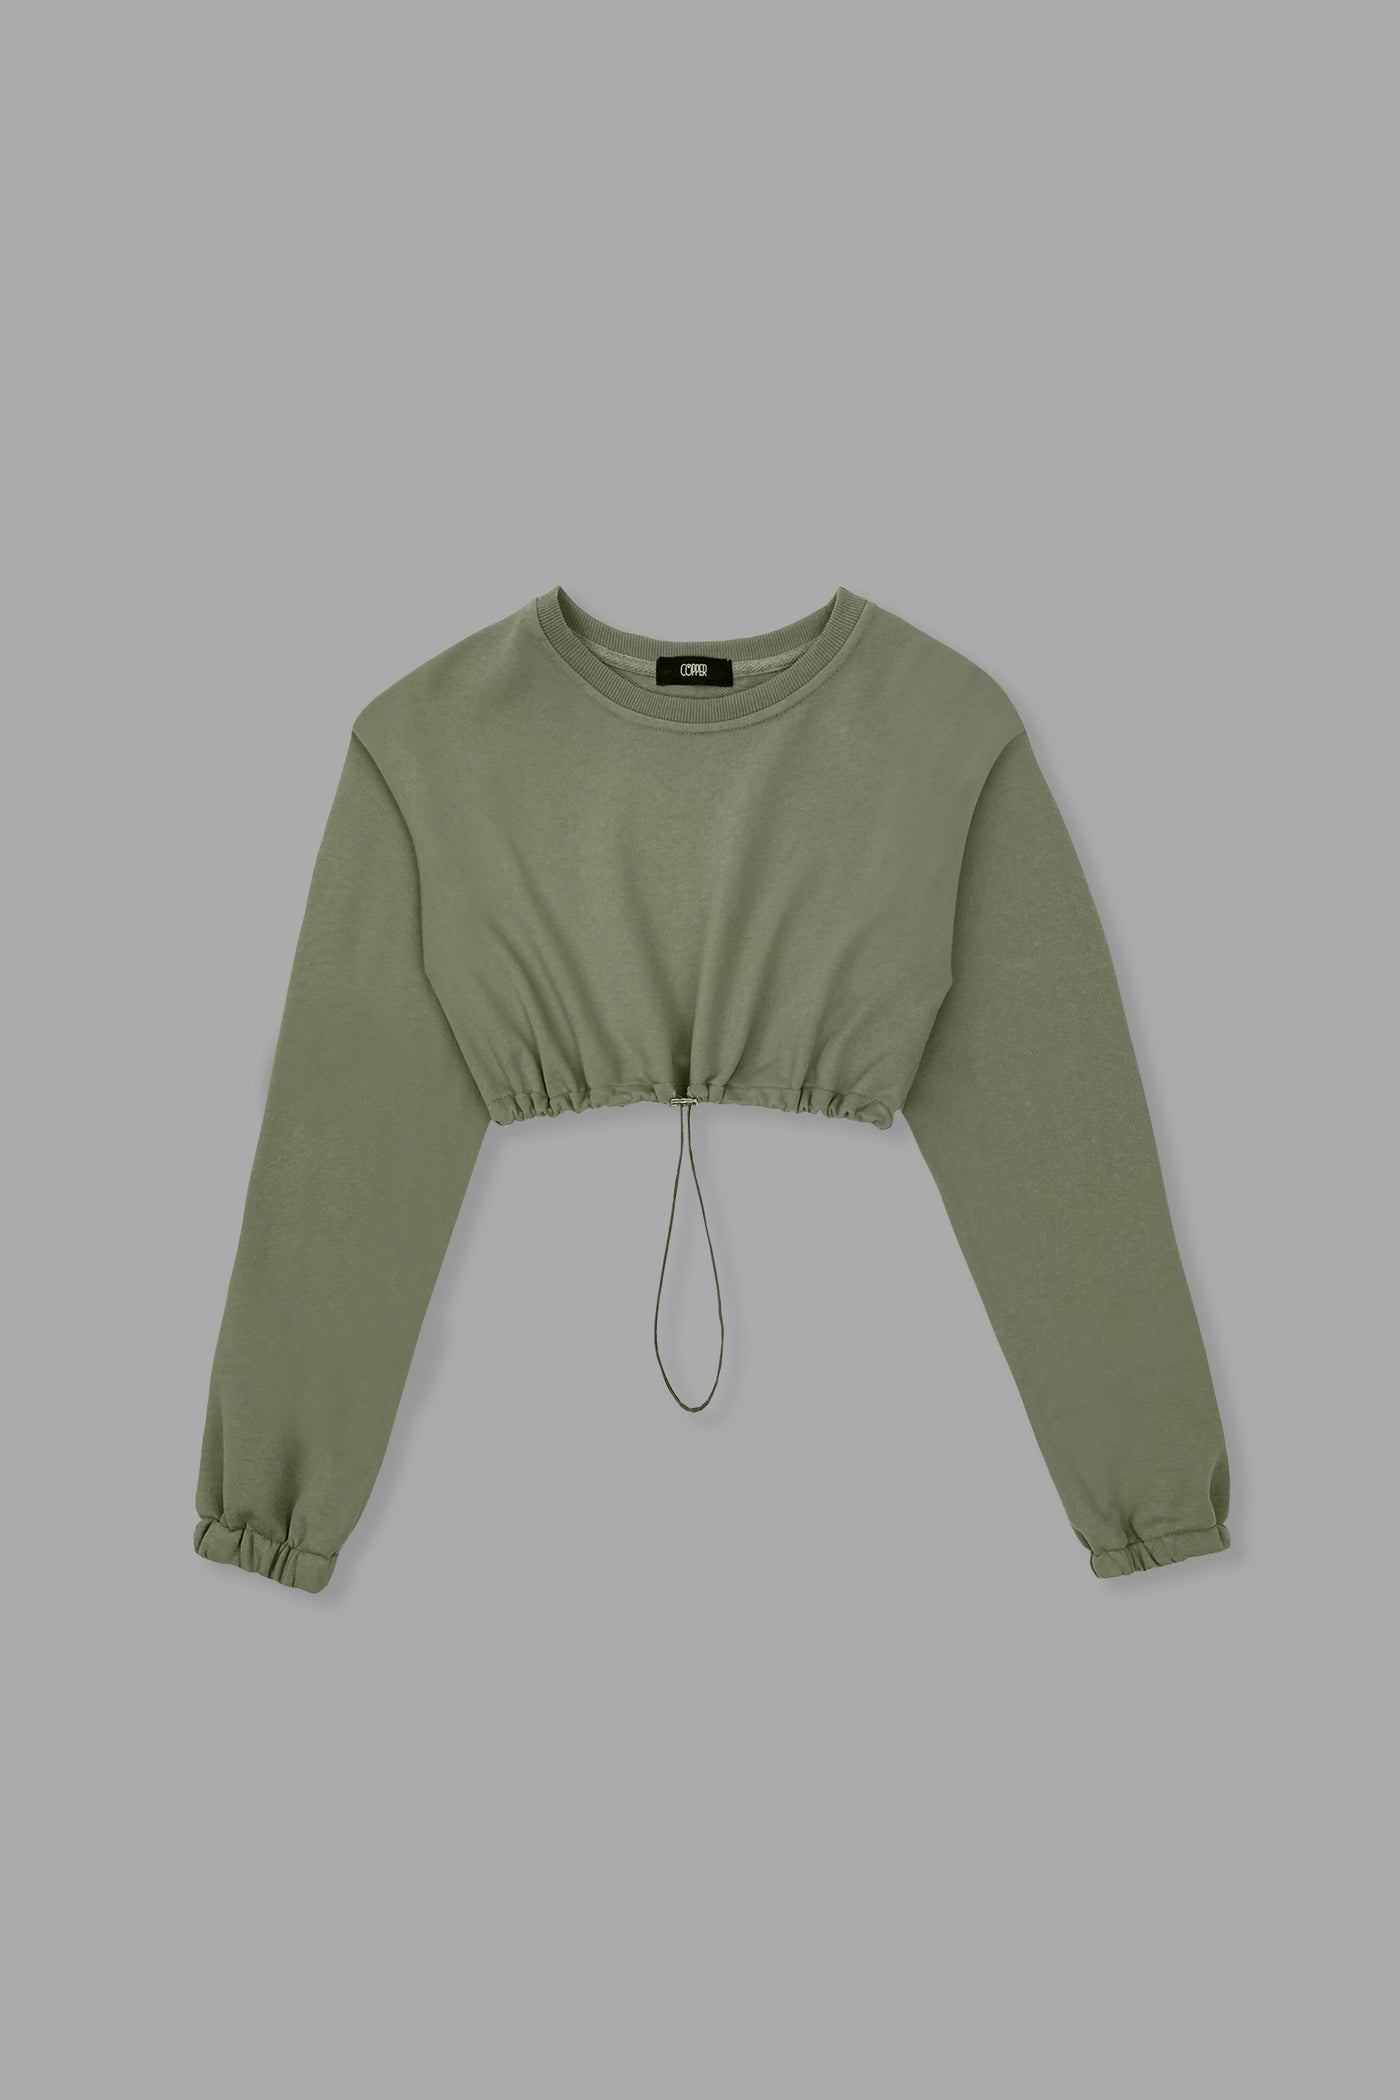 [EVERYDAY] Daily Basis Draw Cord Cropped Sweatshirt - Sierra